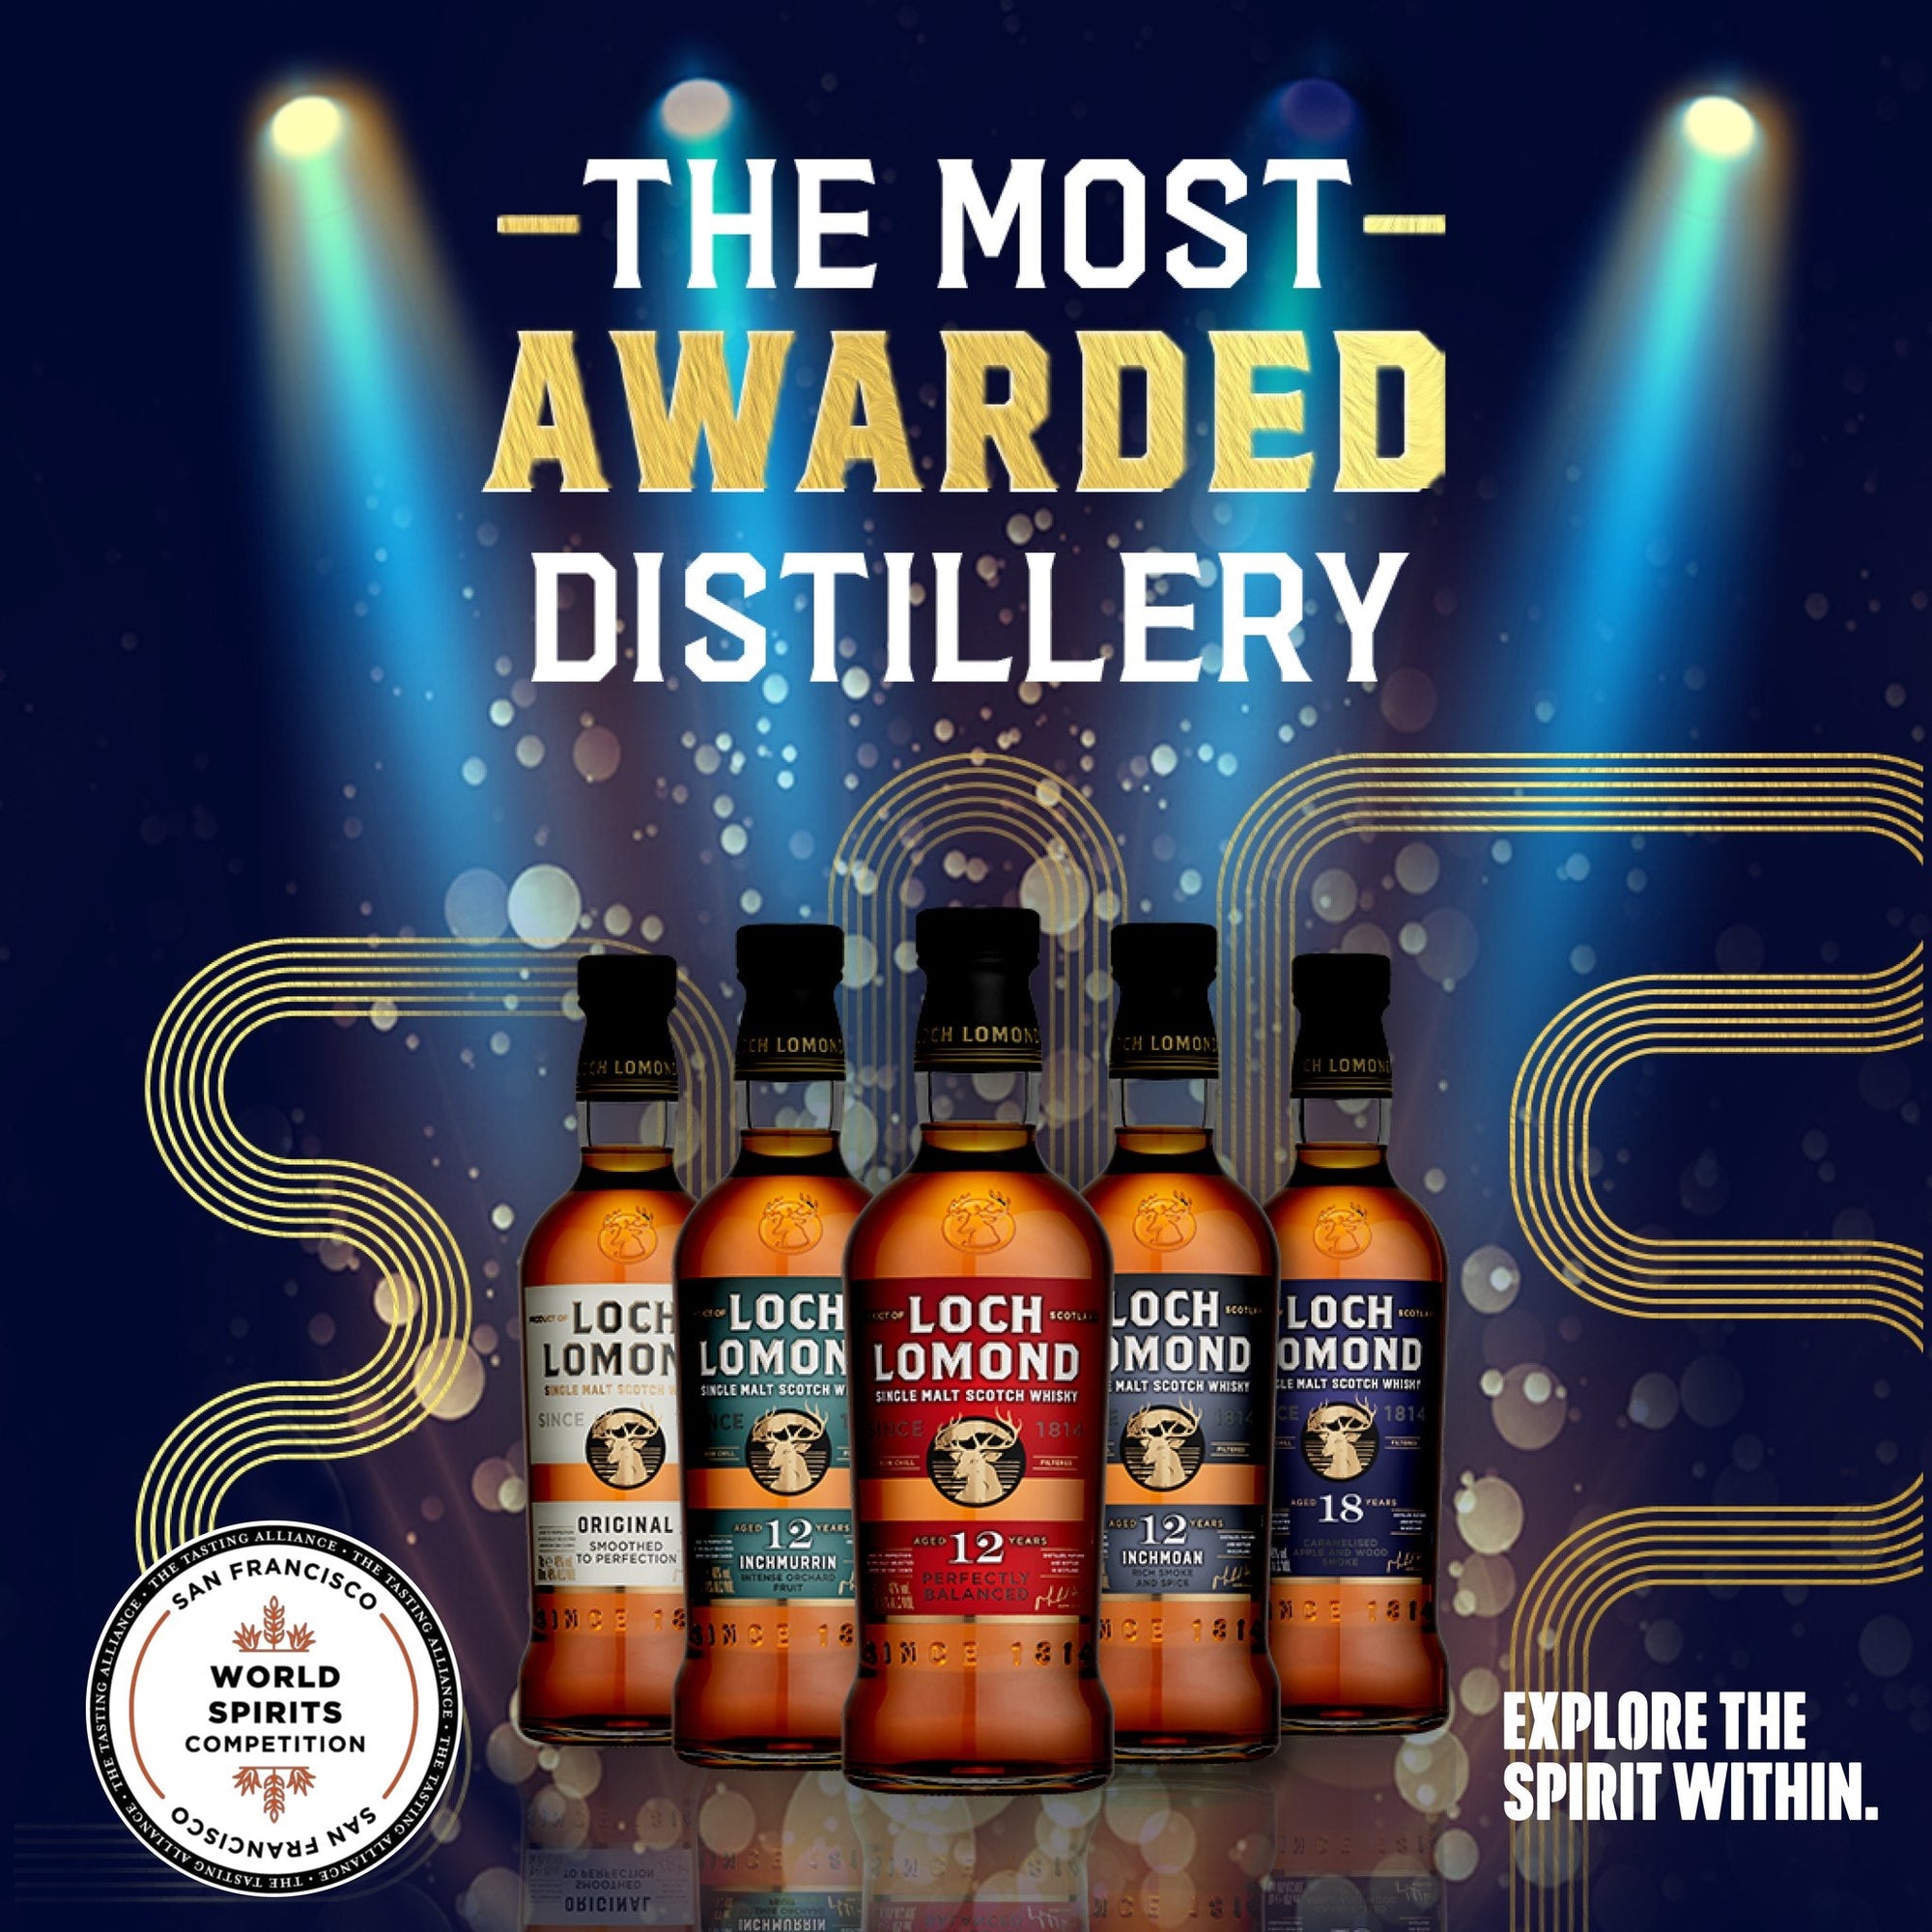 Loch Lomond Wins “Most Awarded Distillery” At San Francisco World Spirits Competition - Loch Lomond Group